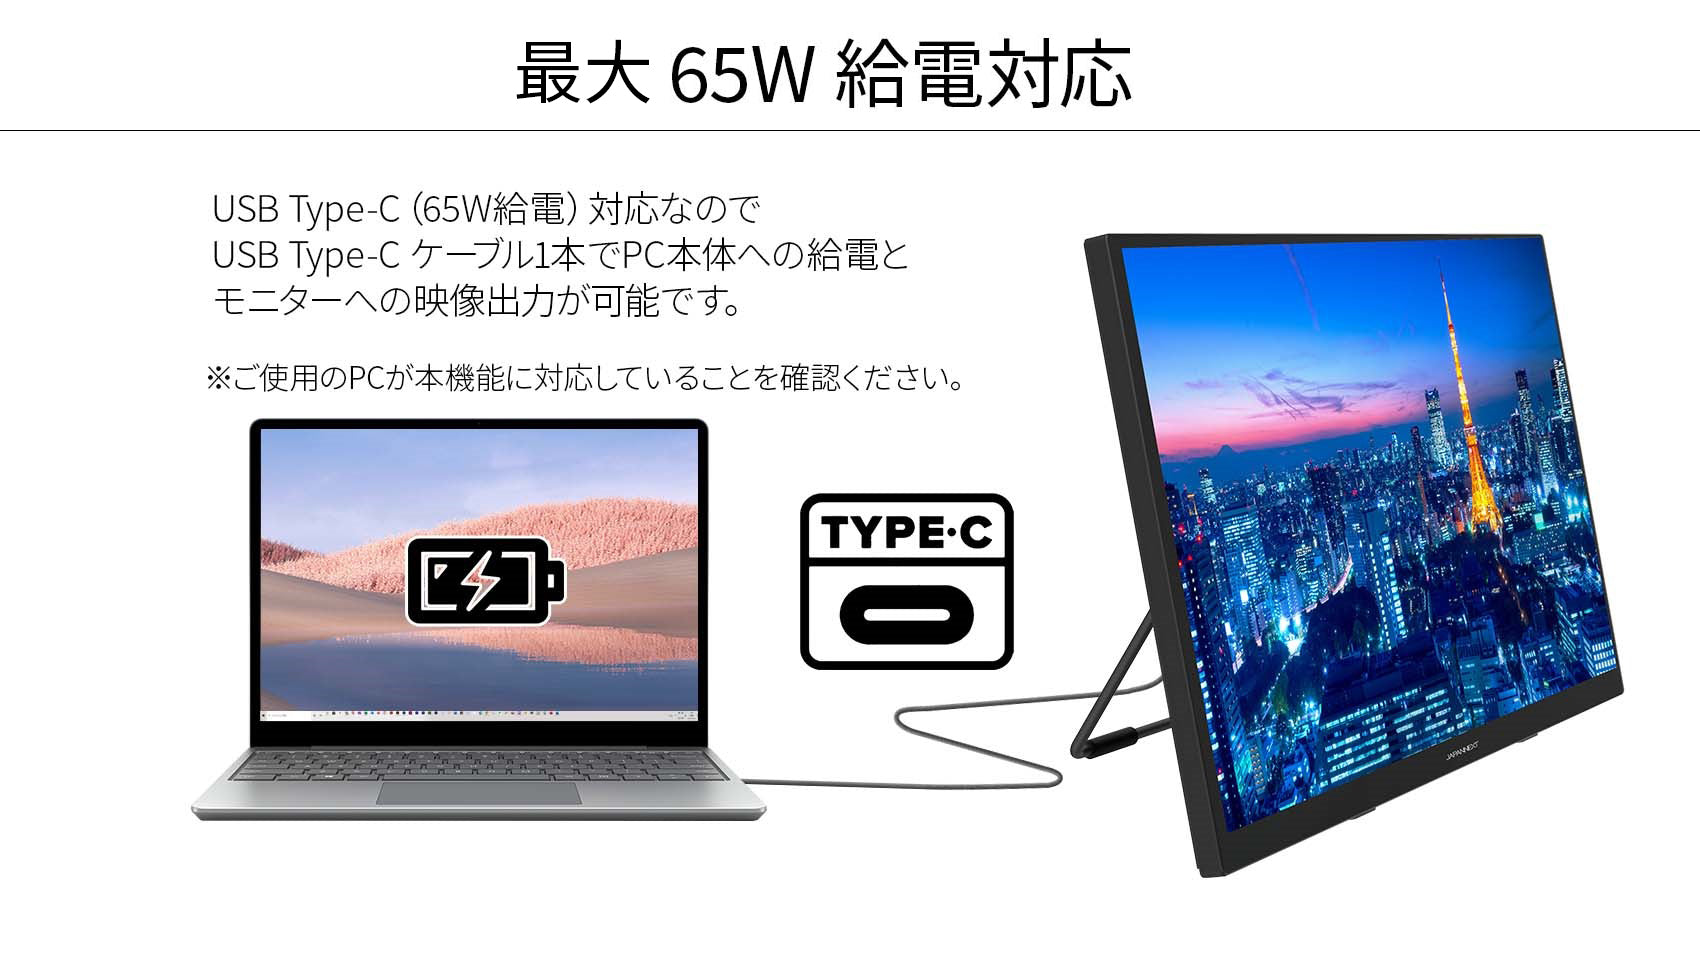 JAPANNEXT 27インチ IPS 10点タッチ対応 WQHD解像度USB-C給電対応 液晶